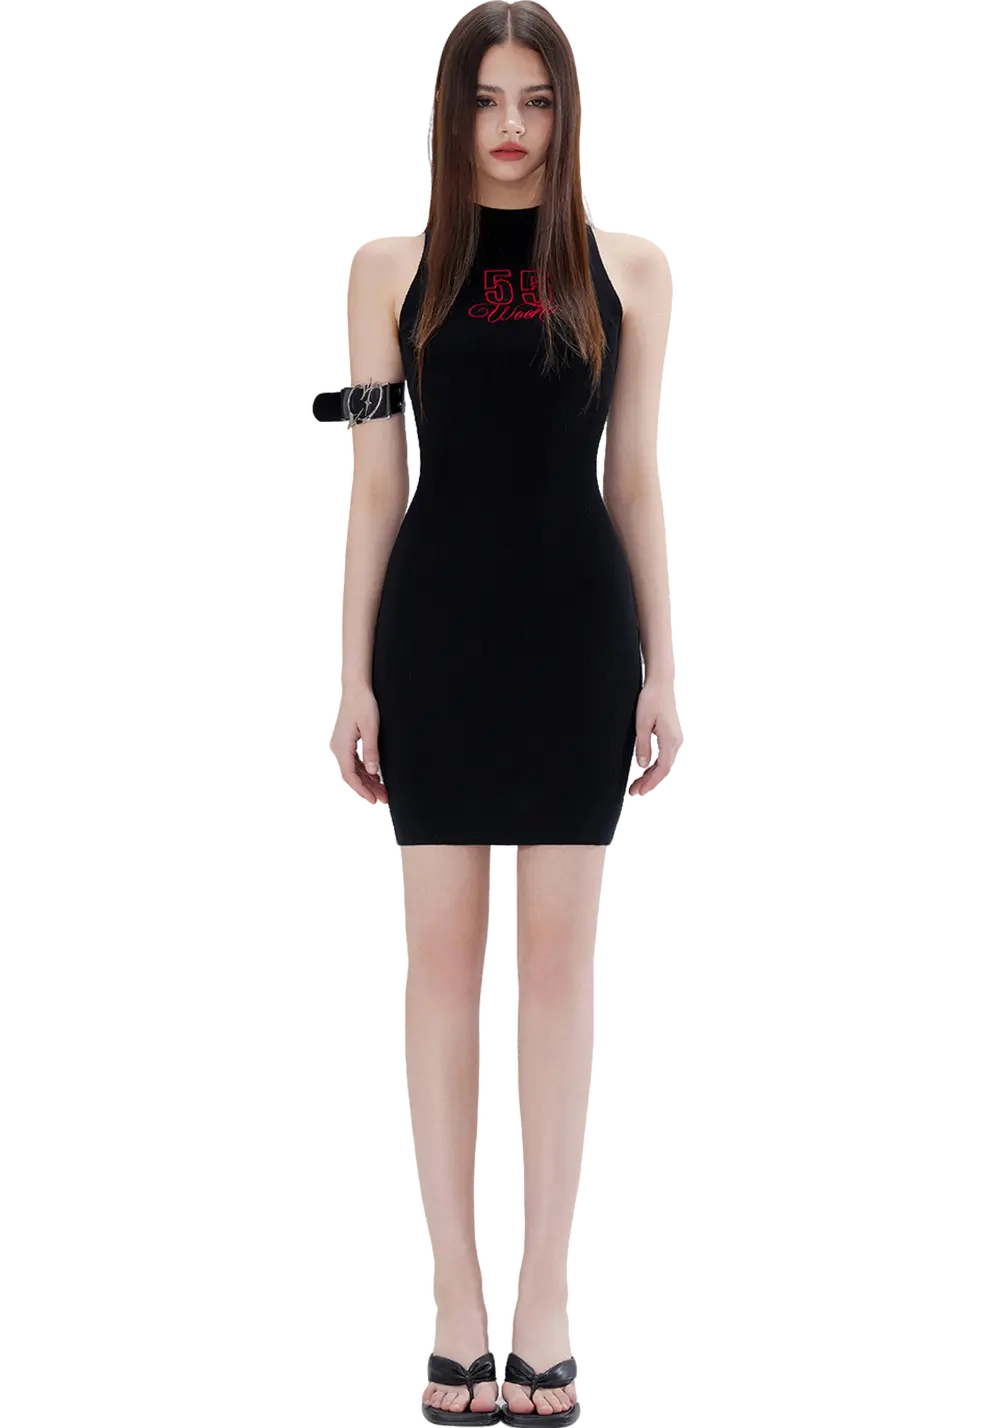 Medium Collar Bodycon Dress - PSYLOS 1, Medium Collar Bodycon Dress, Dress/Skirt, WooHa, PSYLOS 1